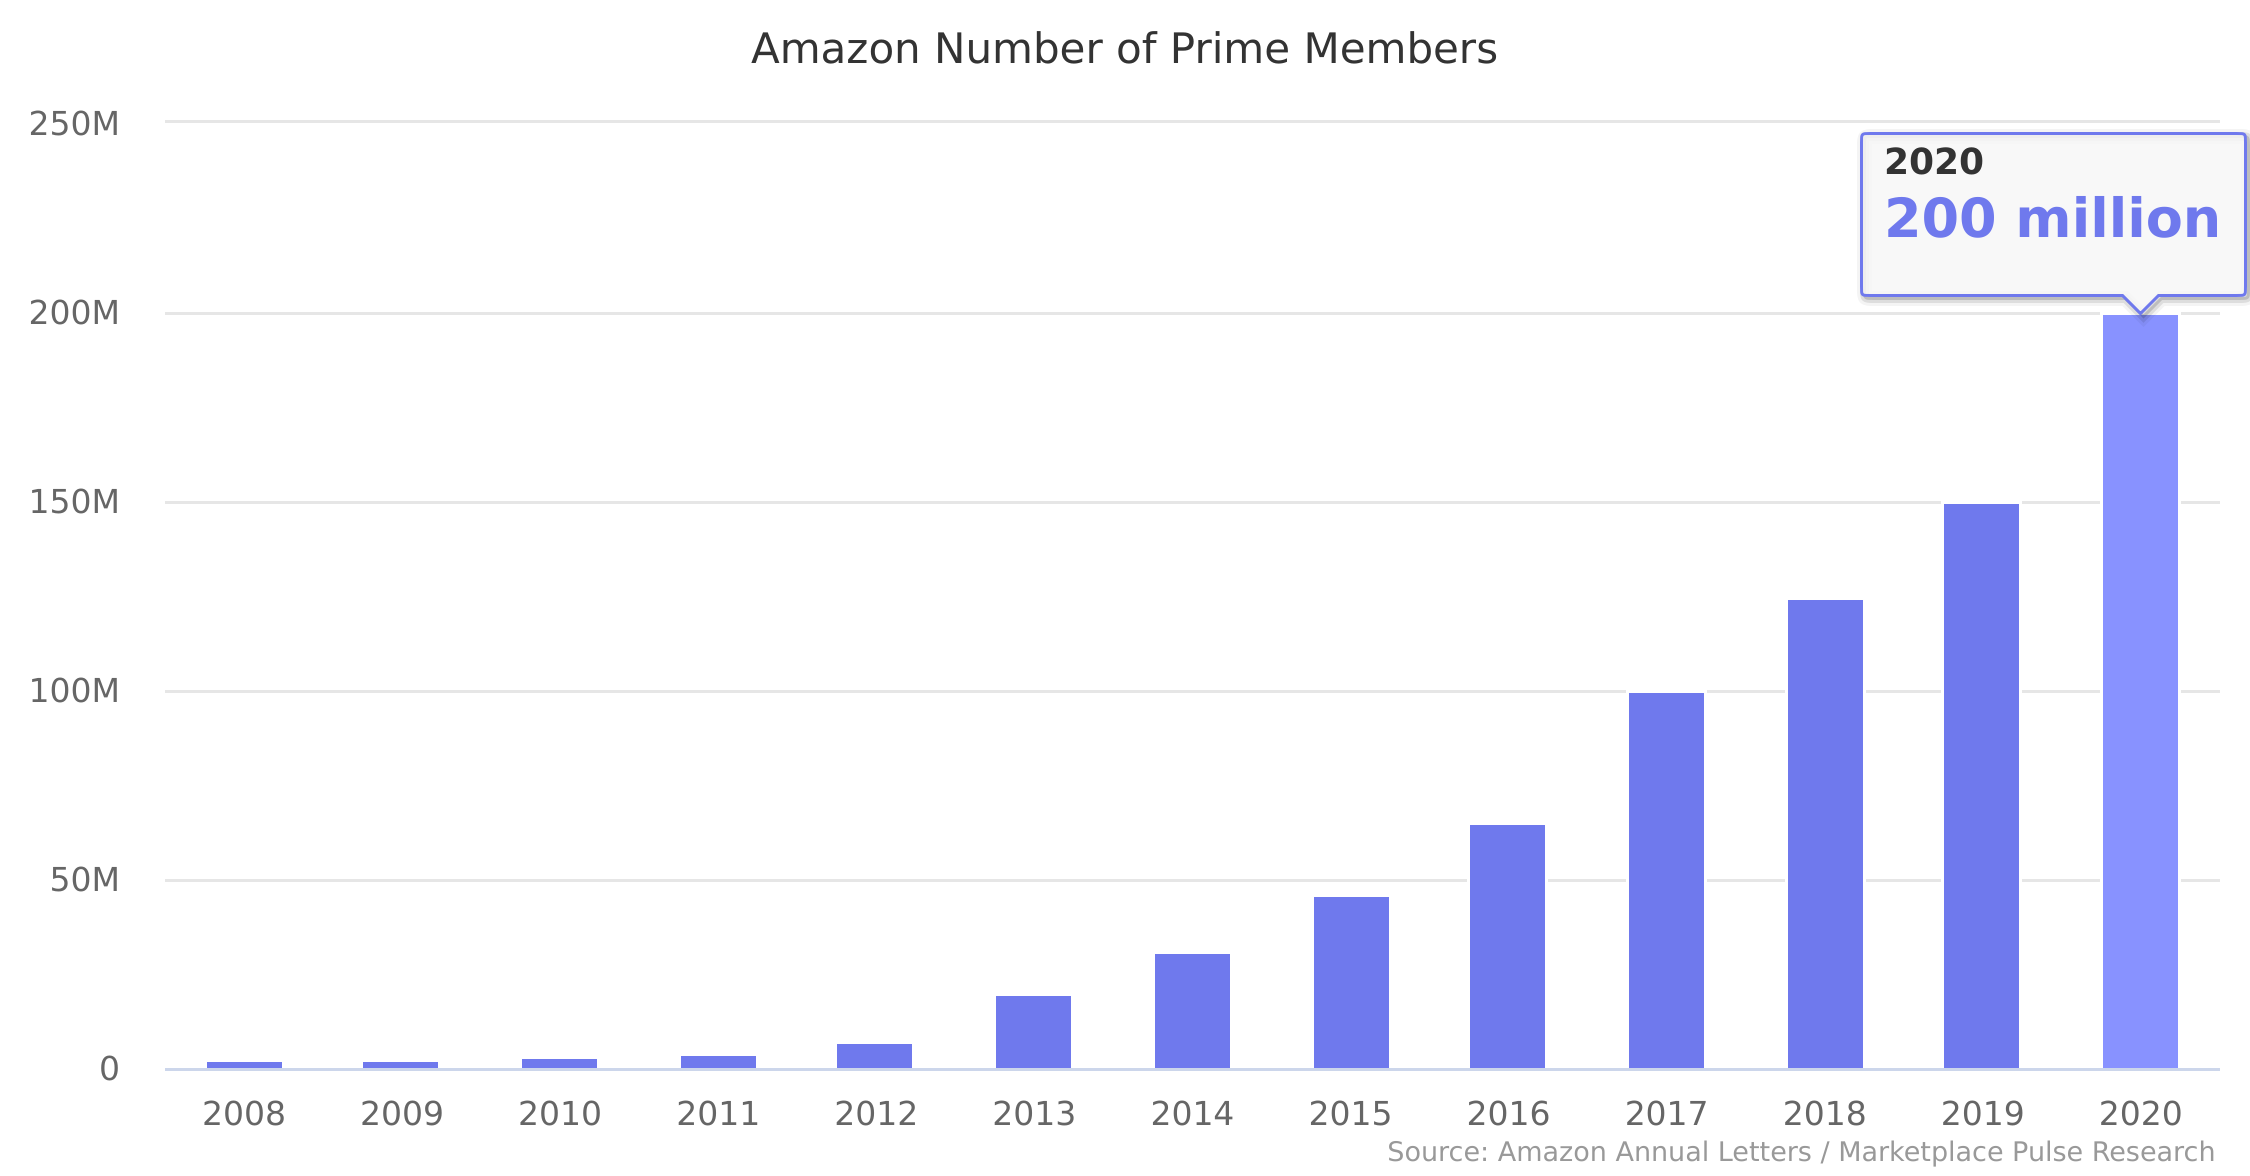 Amazon Number of Prime Members